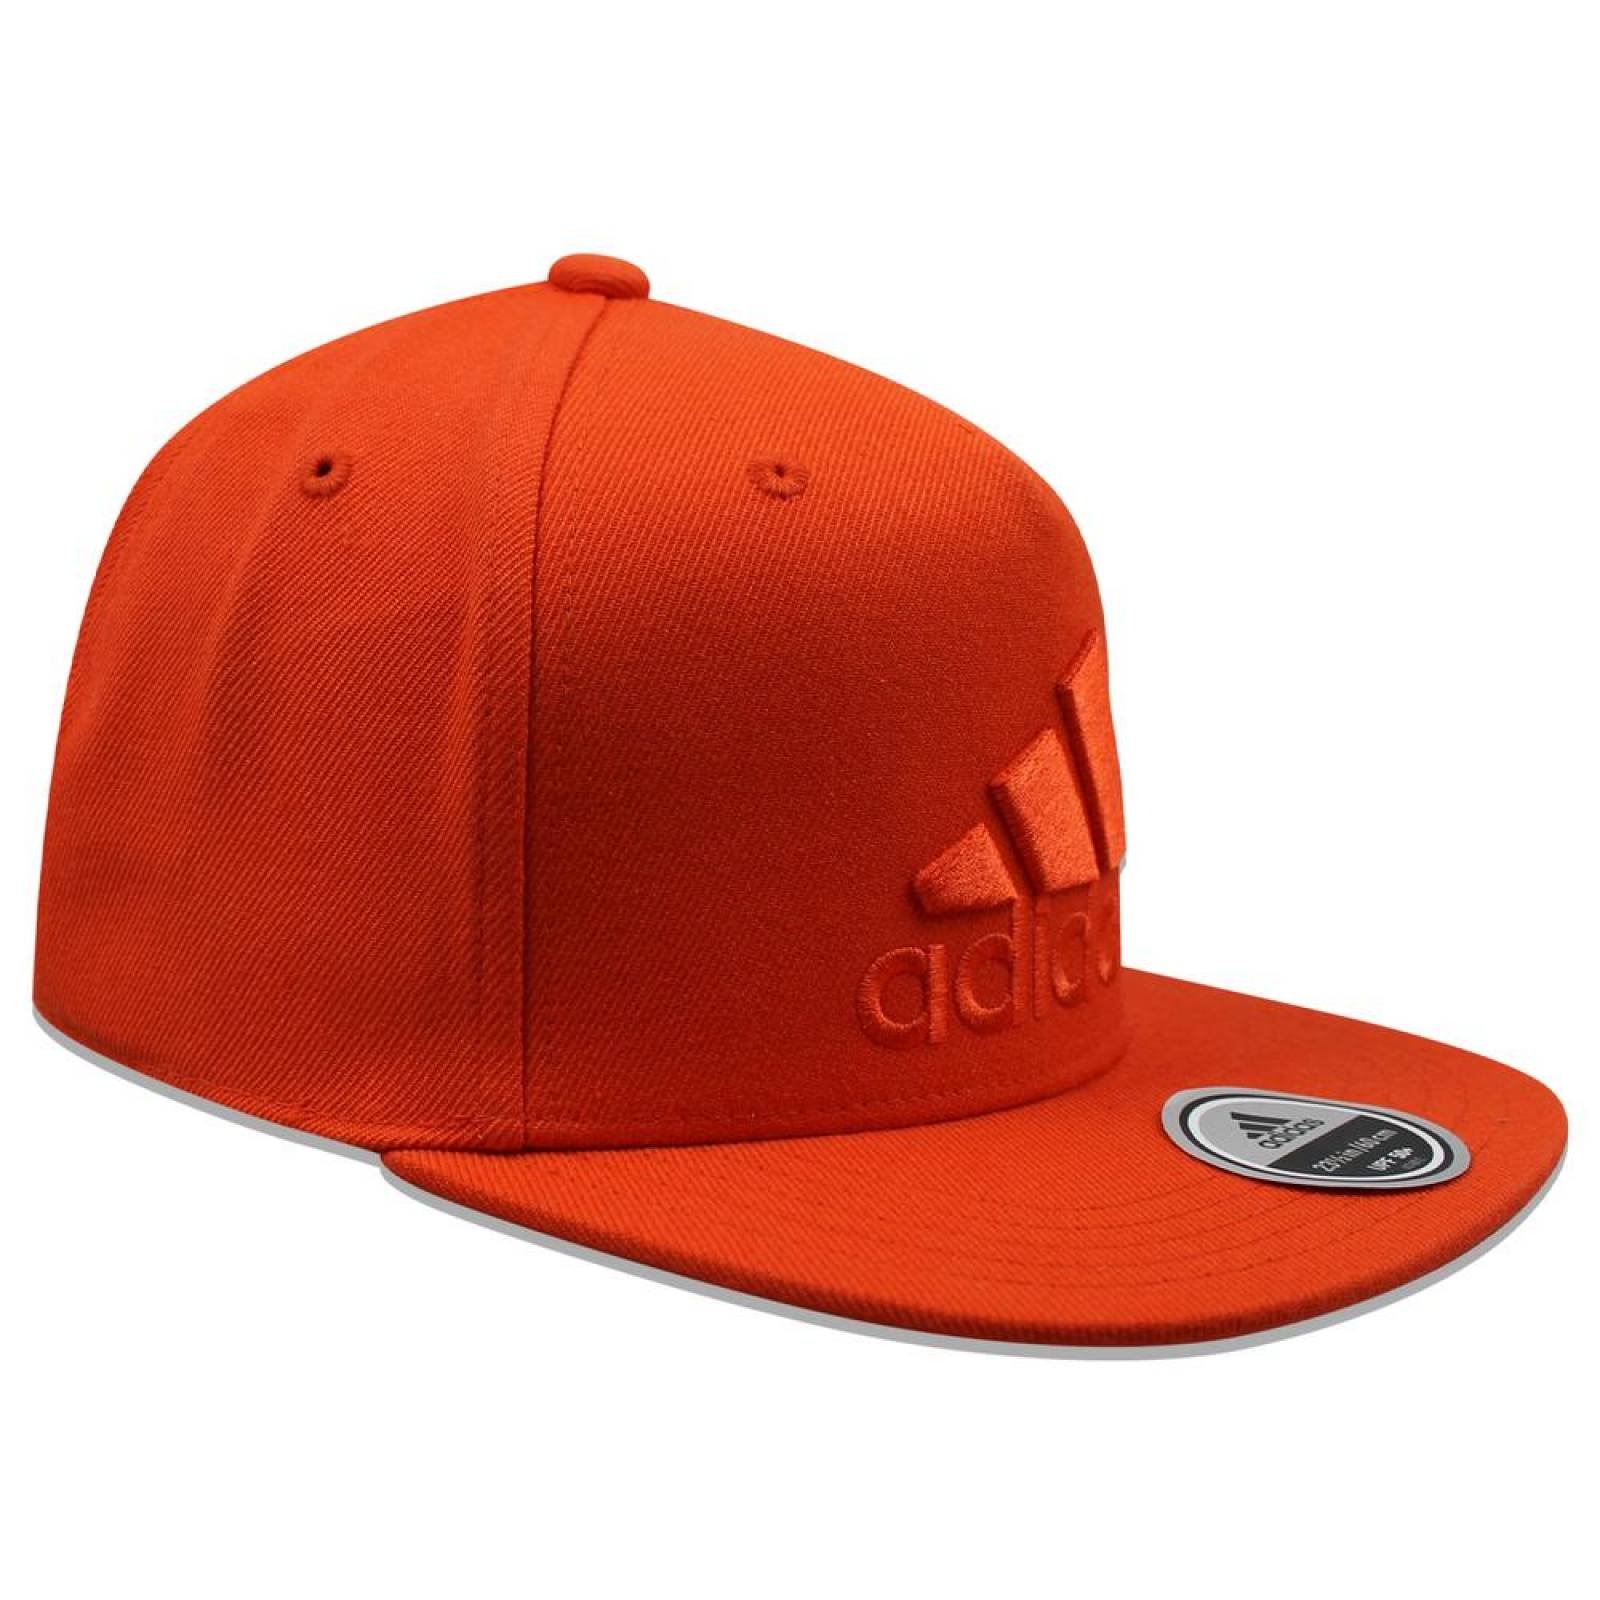 Gorra Adidas Snapback S97607 Naranja 